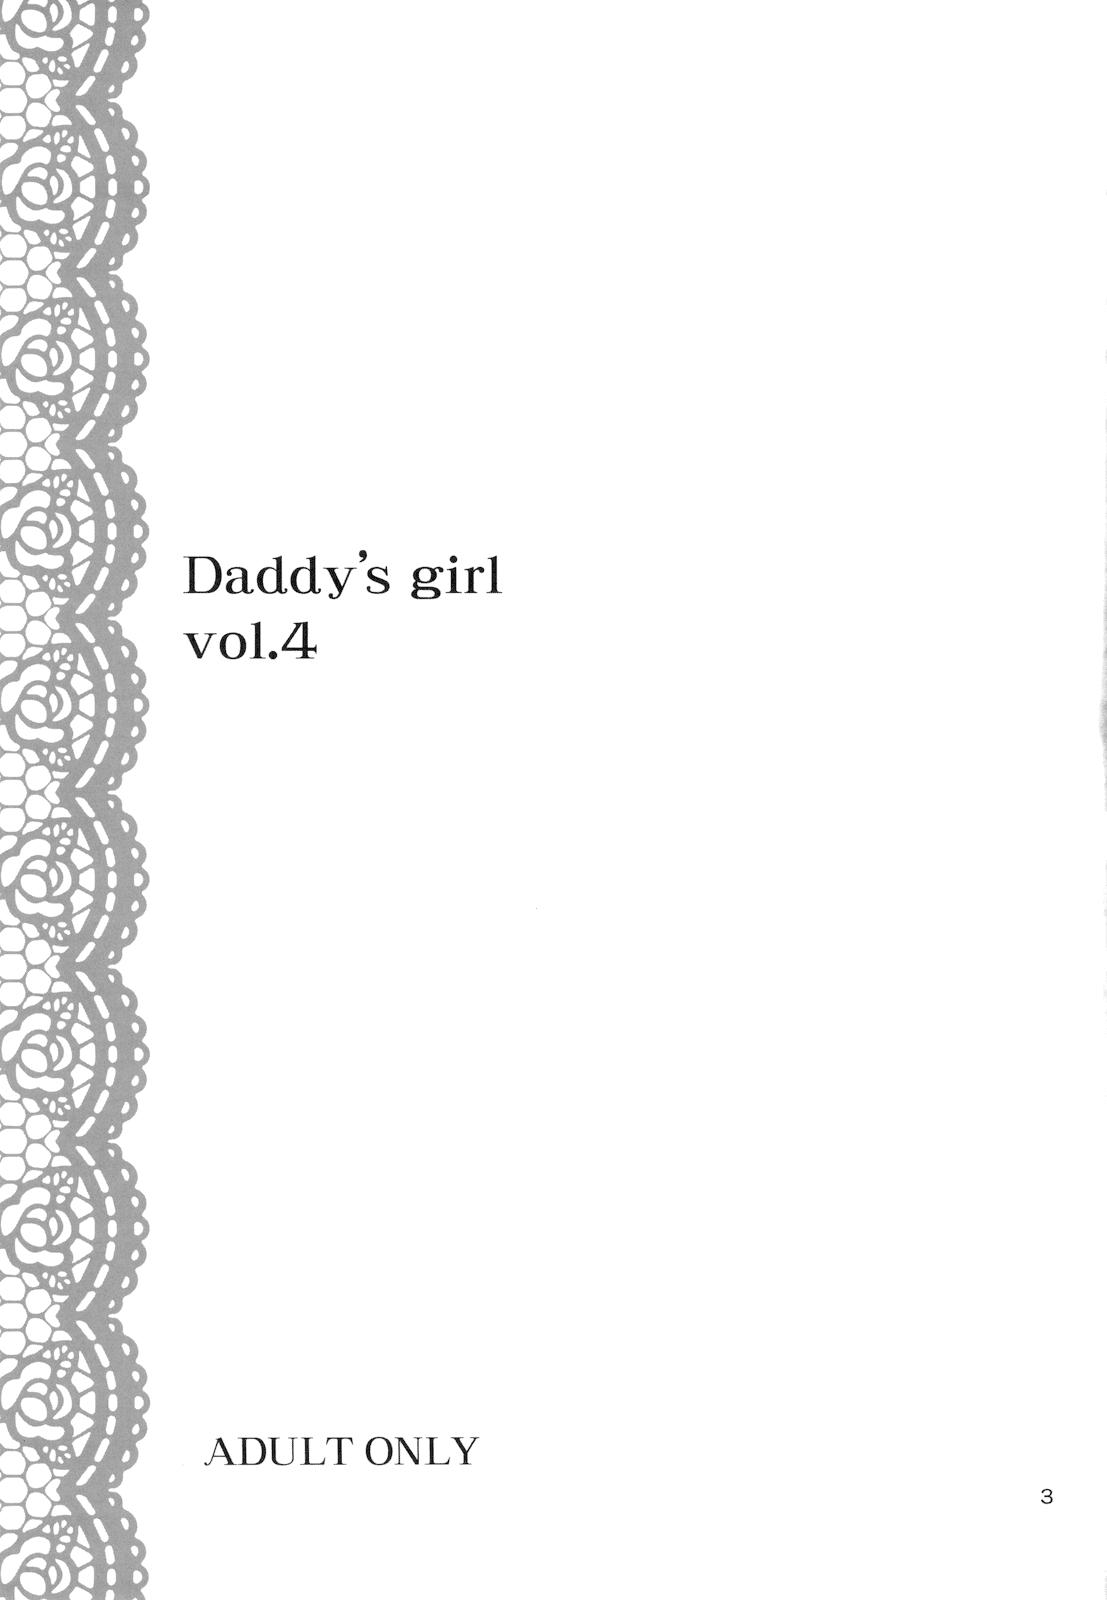 DG - Daddy's Girl Vol. 4 1